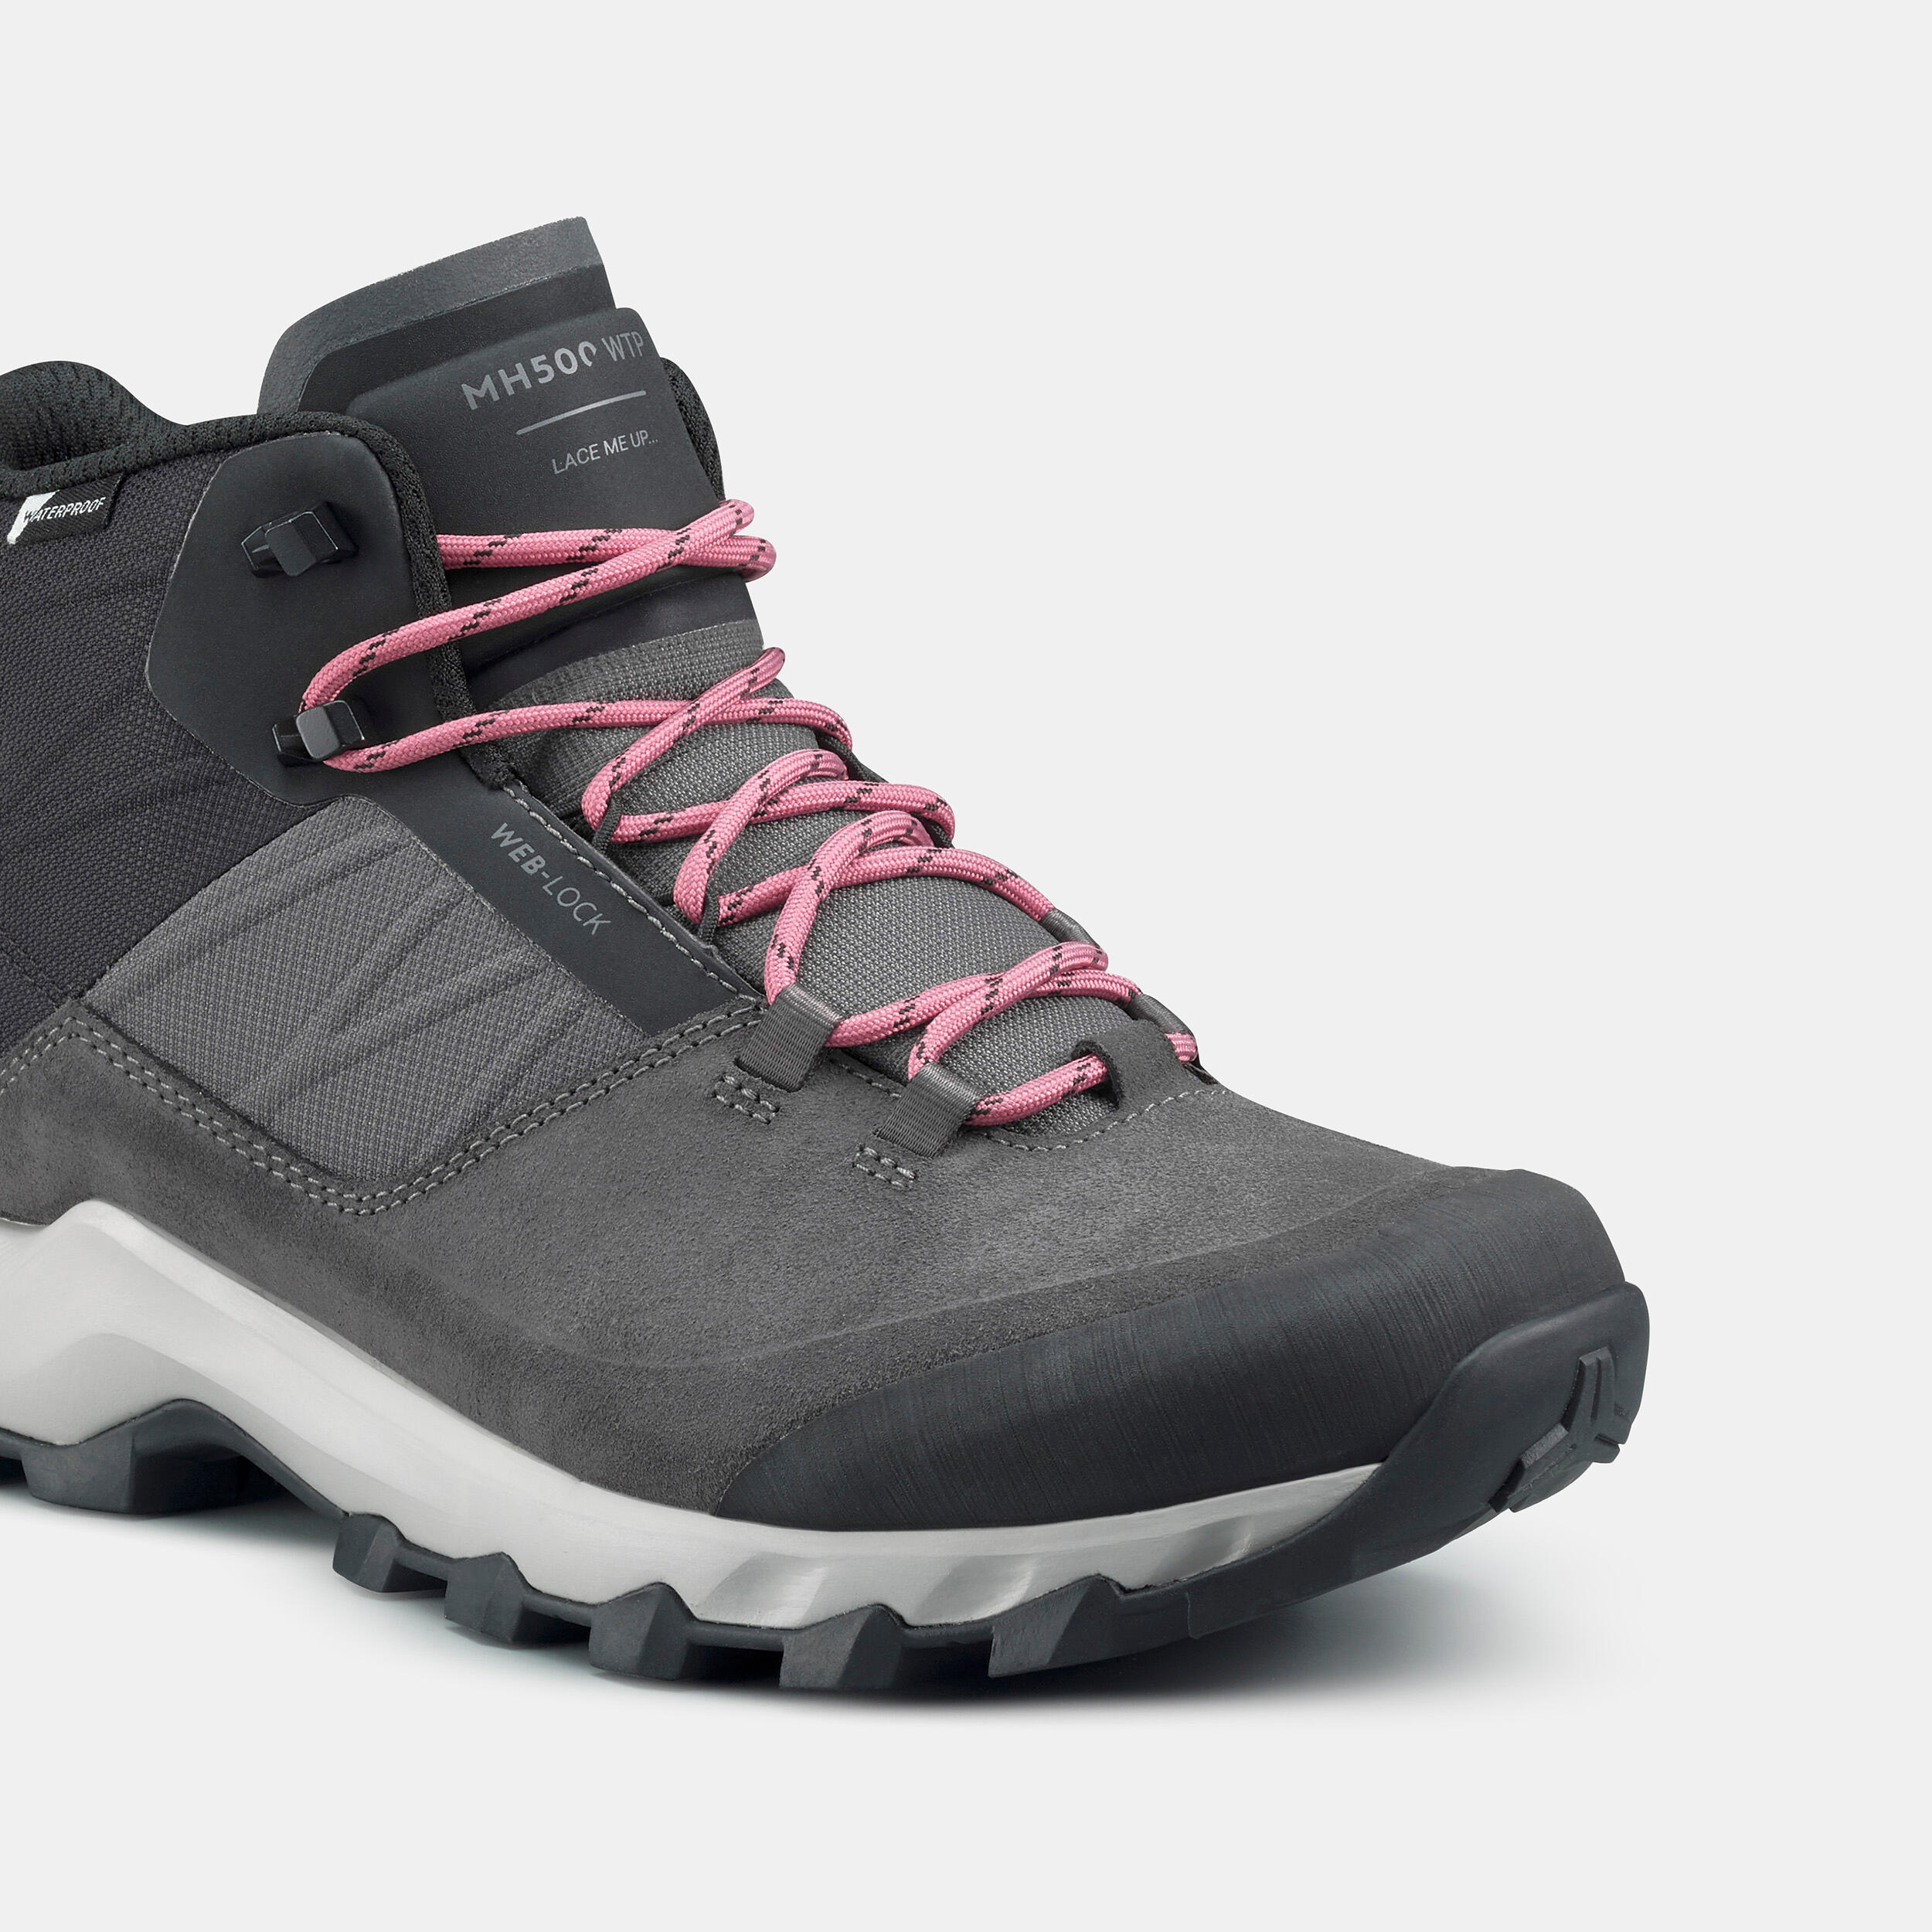 Women's Waterproof Mountain Walking Shoes - MH500 MID Grey 6/6